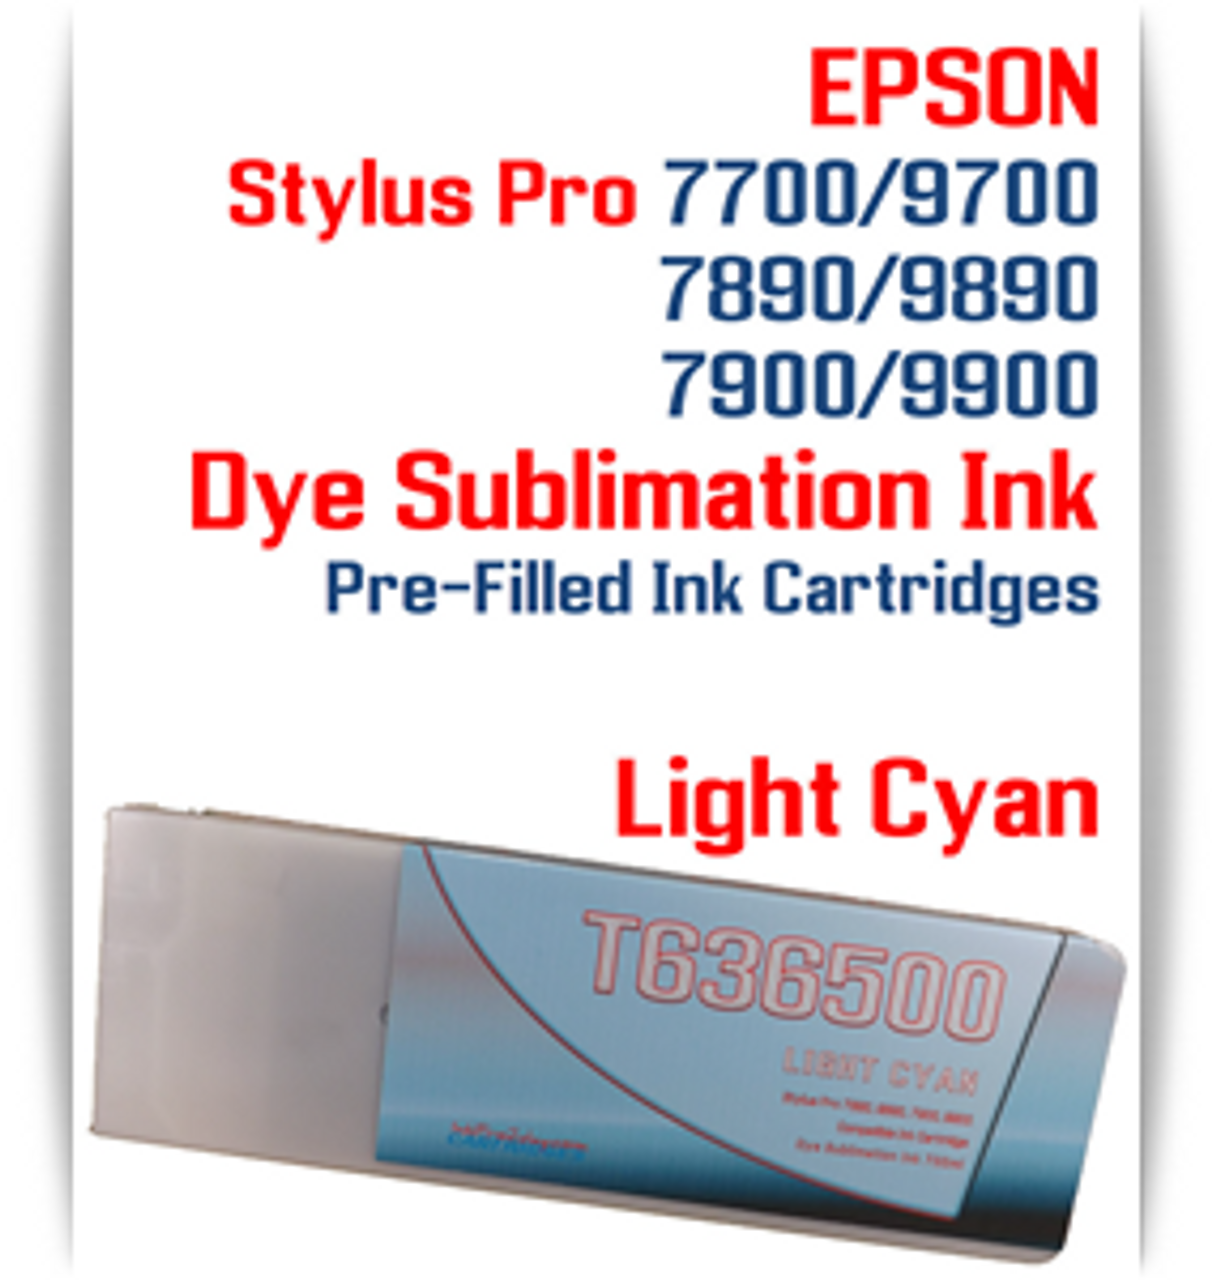 Light Cyan Epson Stylus Pro 7890/9890 Pre-Filled Dye Sublimation Ink Cartridge